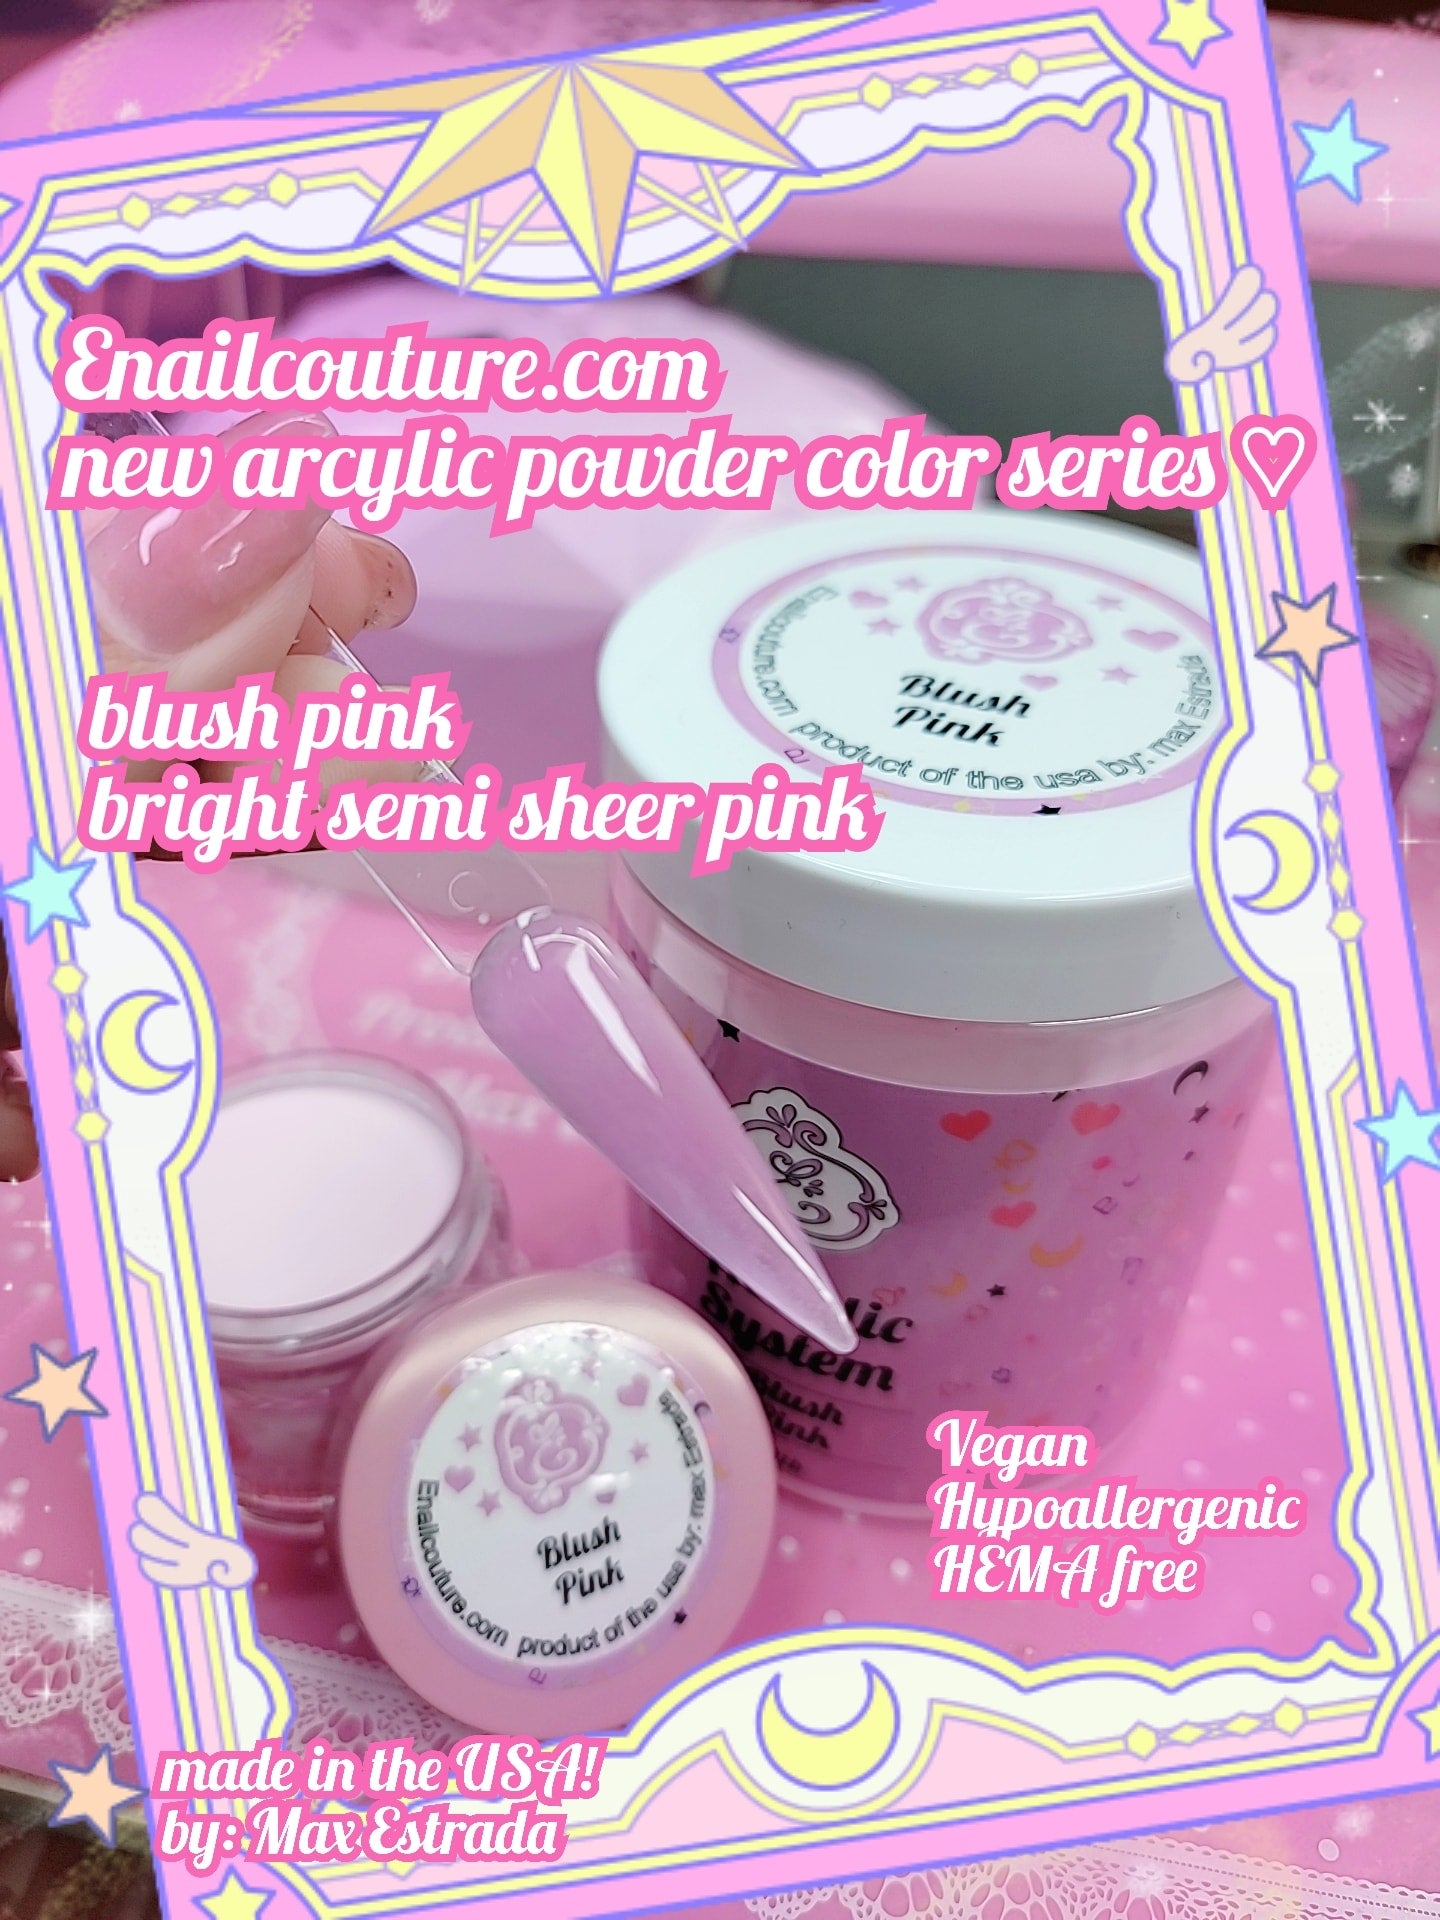 Blush Pink (Nude Pink Acrylic Powder - Professional Acrylic Nail Powder Polymer Natural Nude Pink Colors Acrylic Nail Powder for Nail Extension Carving DIY Beginners Salon)